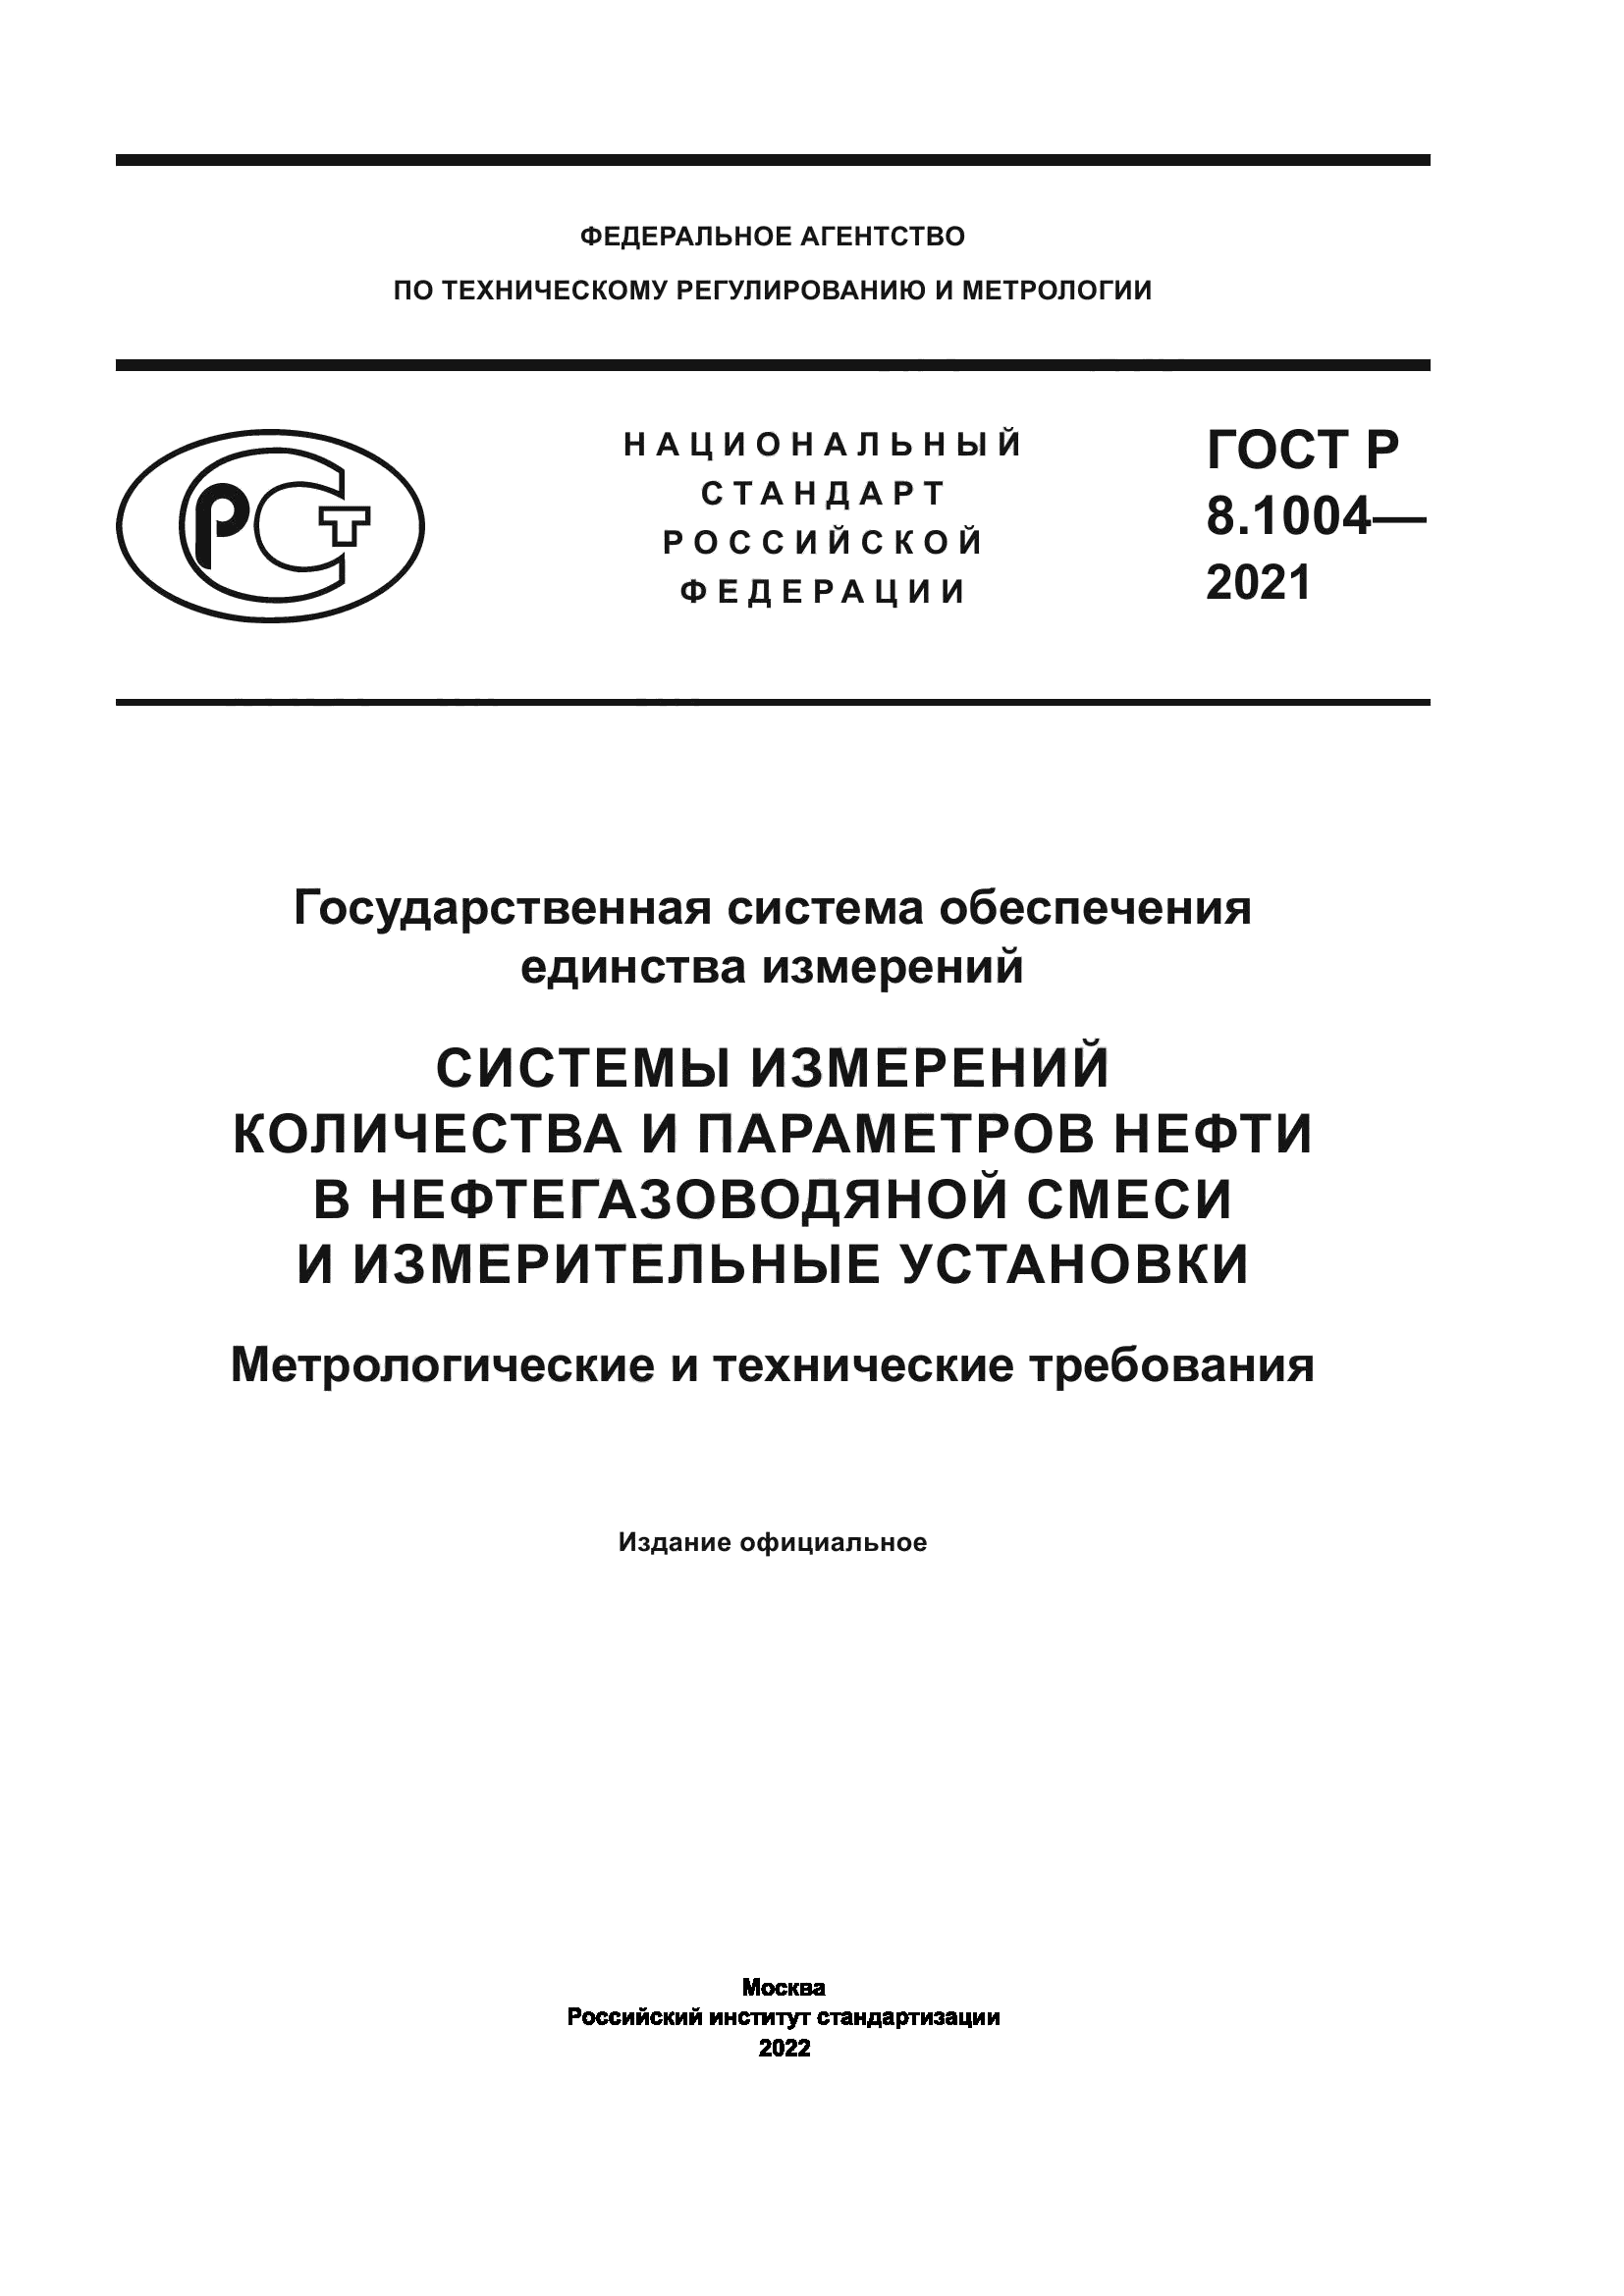 ГОСТ Р 8.1004-2021